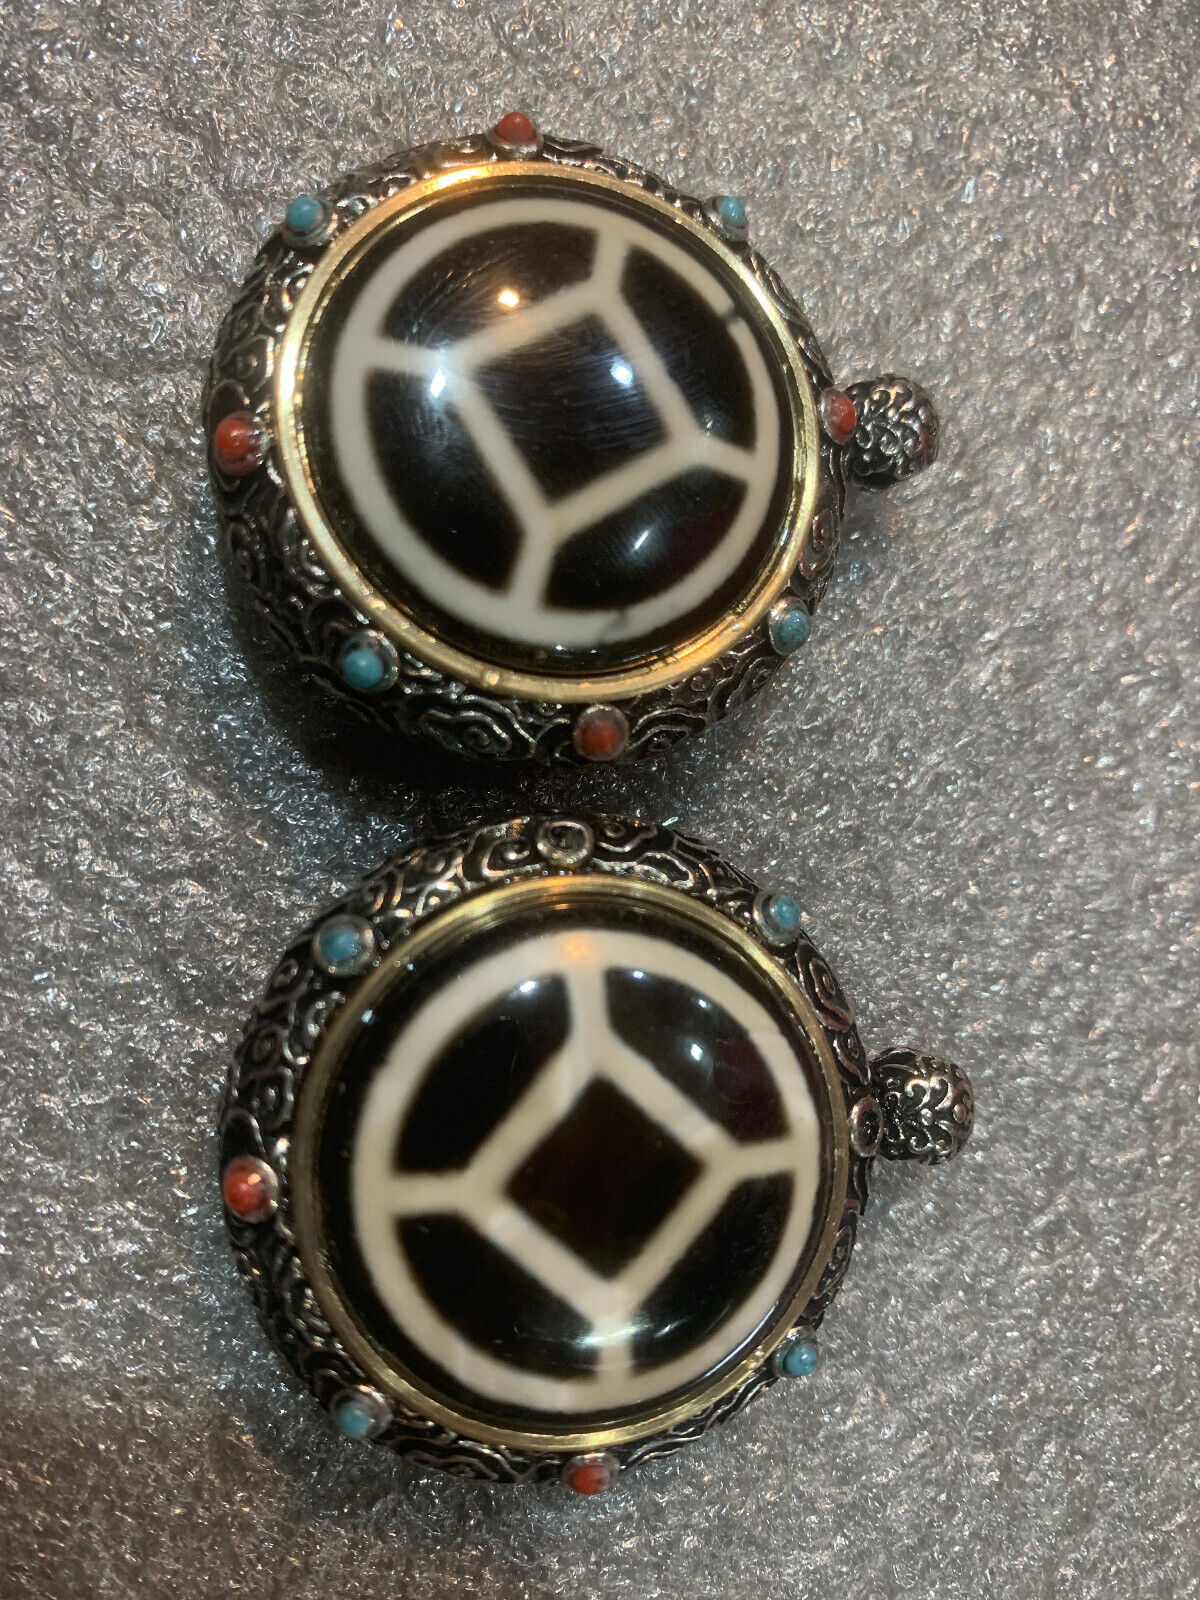 2 Pcs Tibetan Silver Om Mani Padme Inlay Agate Dzi Bead Prayer Wheel Pendants